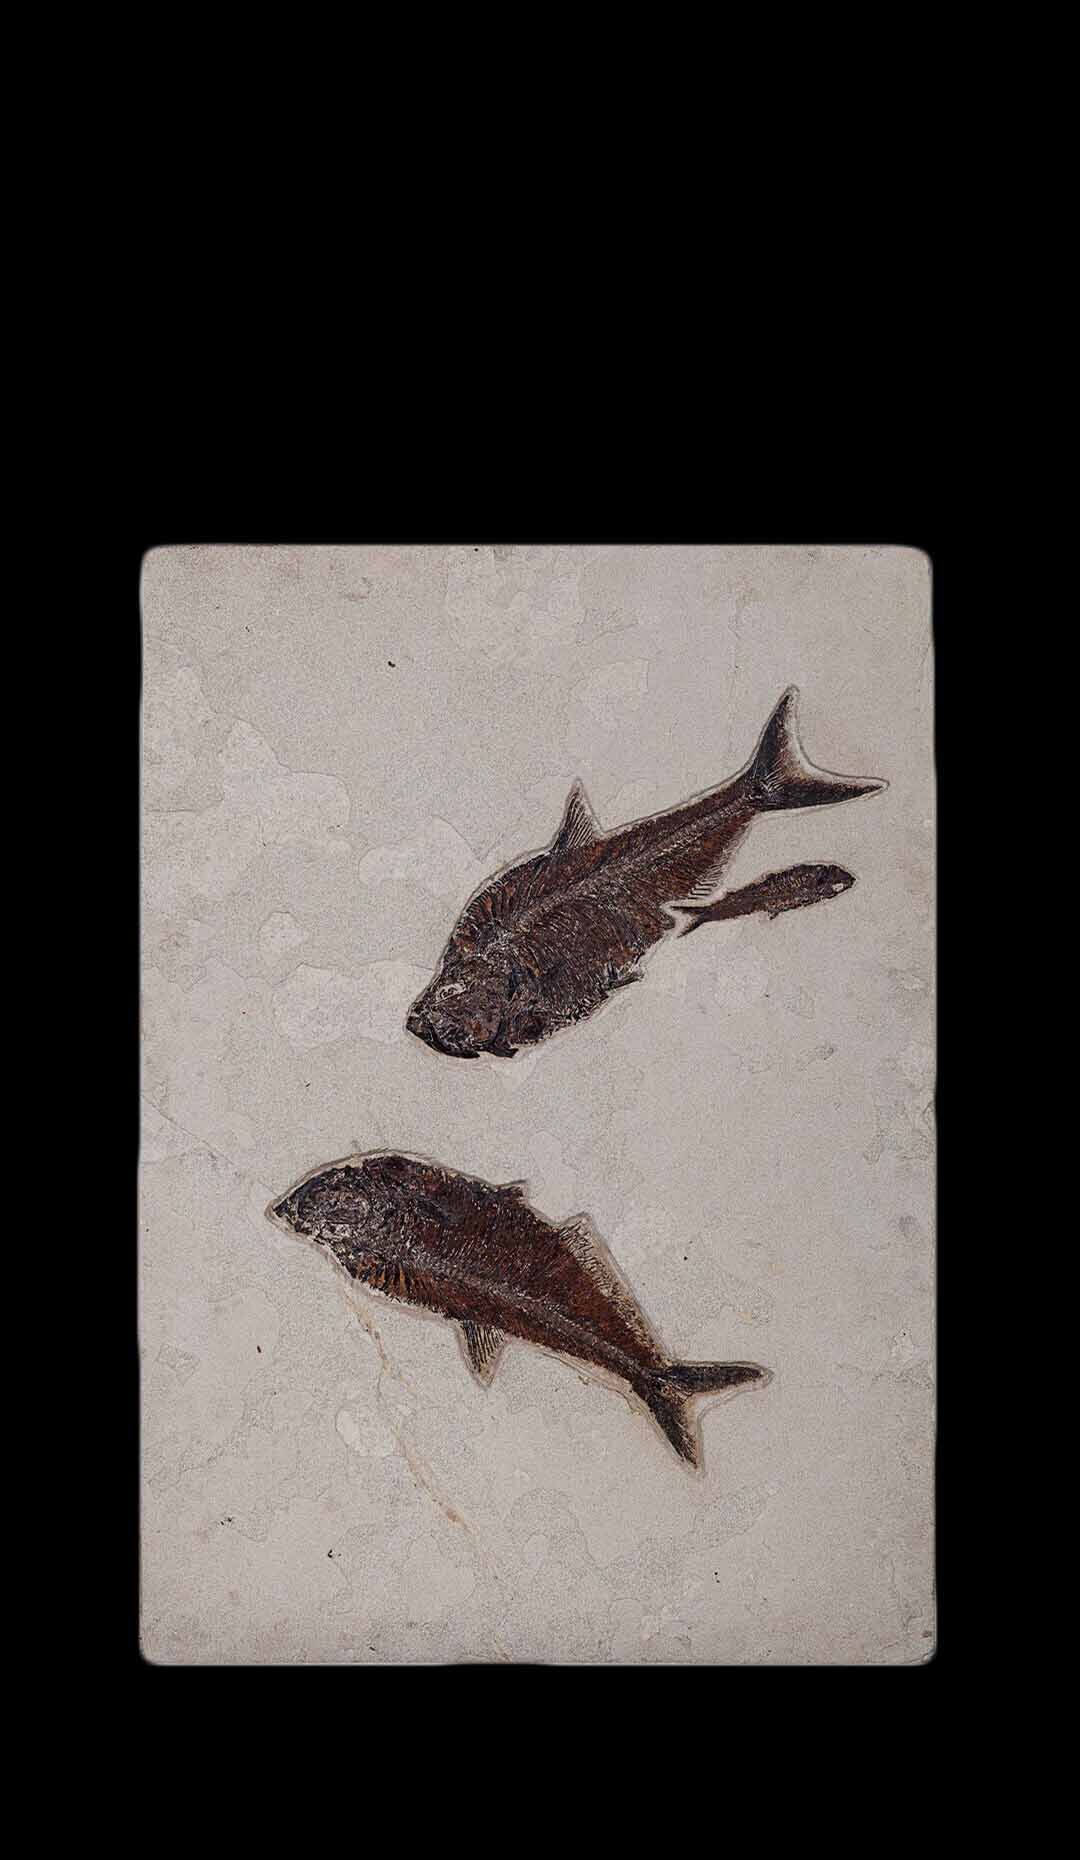 Dyplomistus Fish Fossil